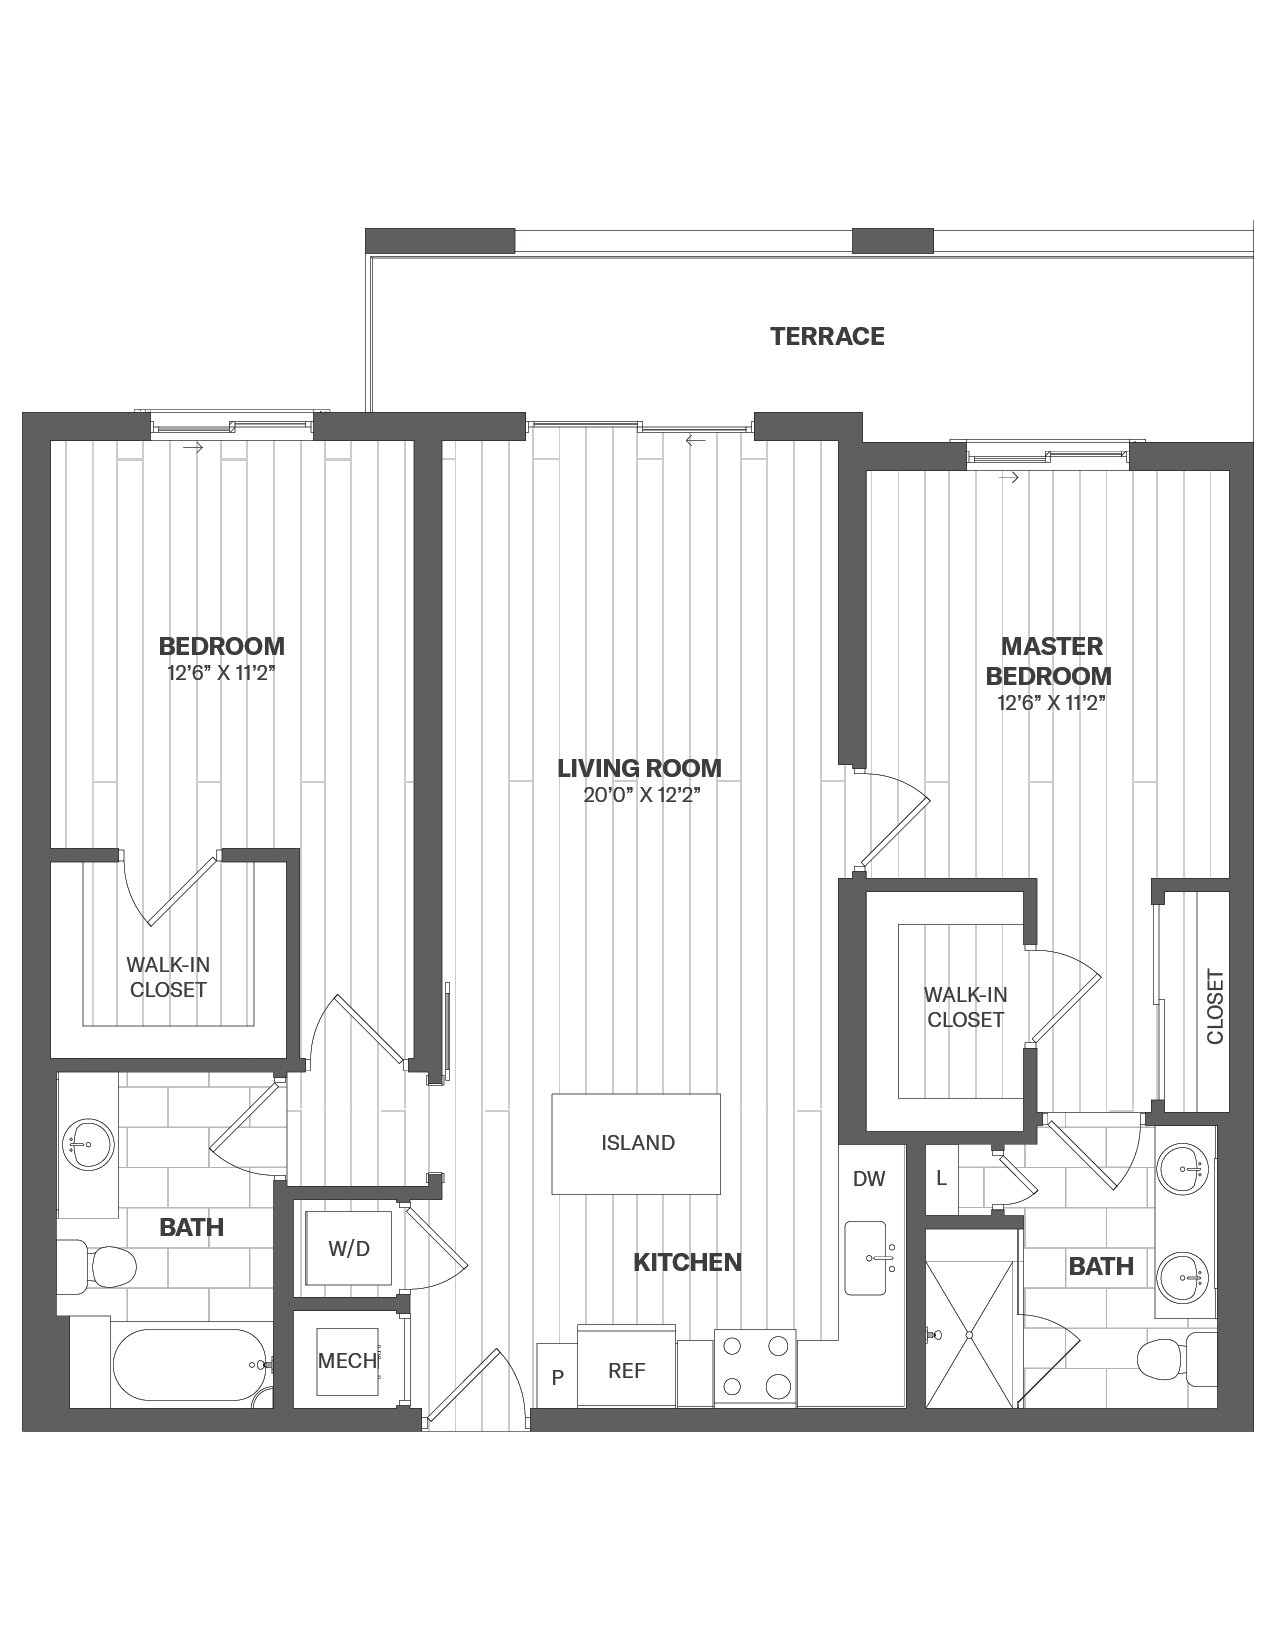 Apartment 200 floorplan